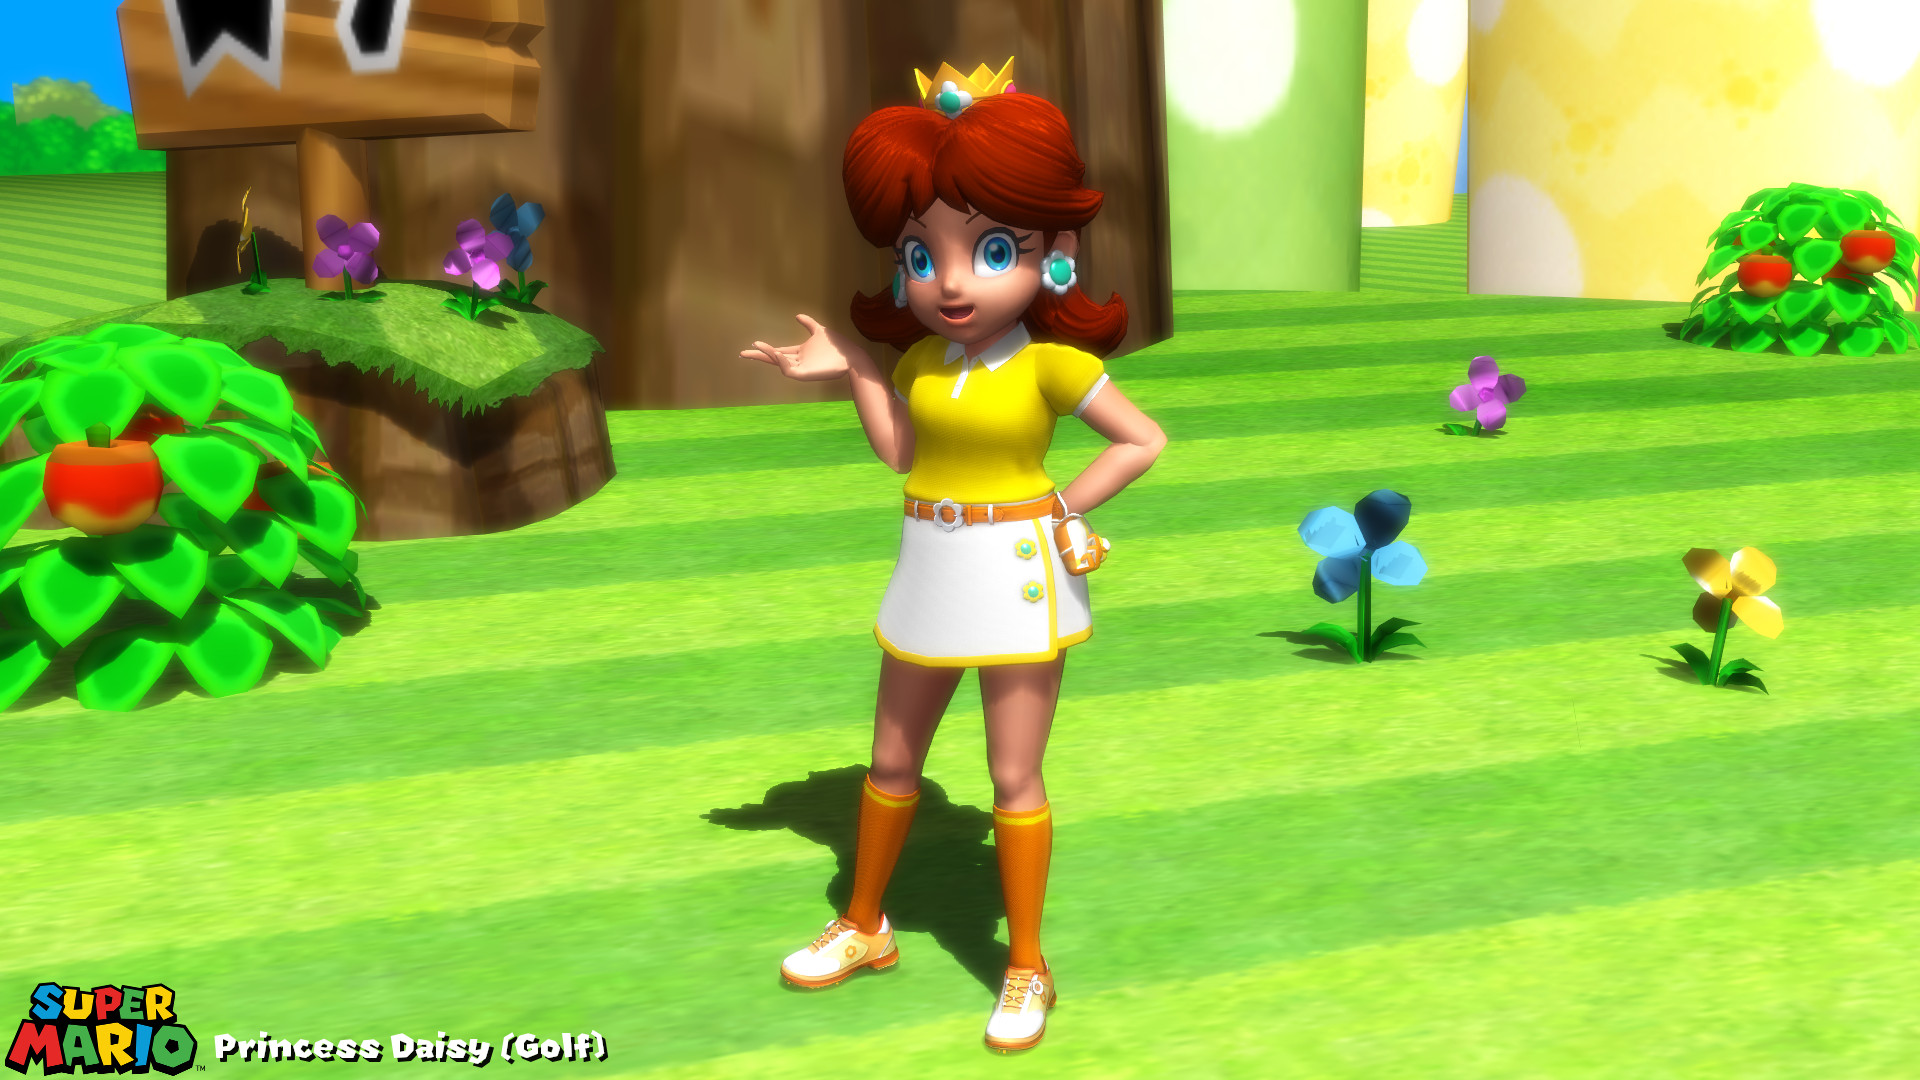 Princess Daisy Golf